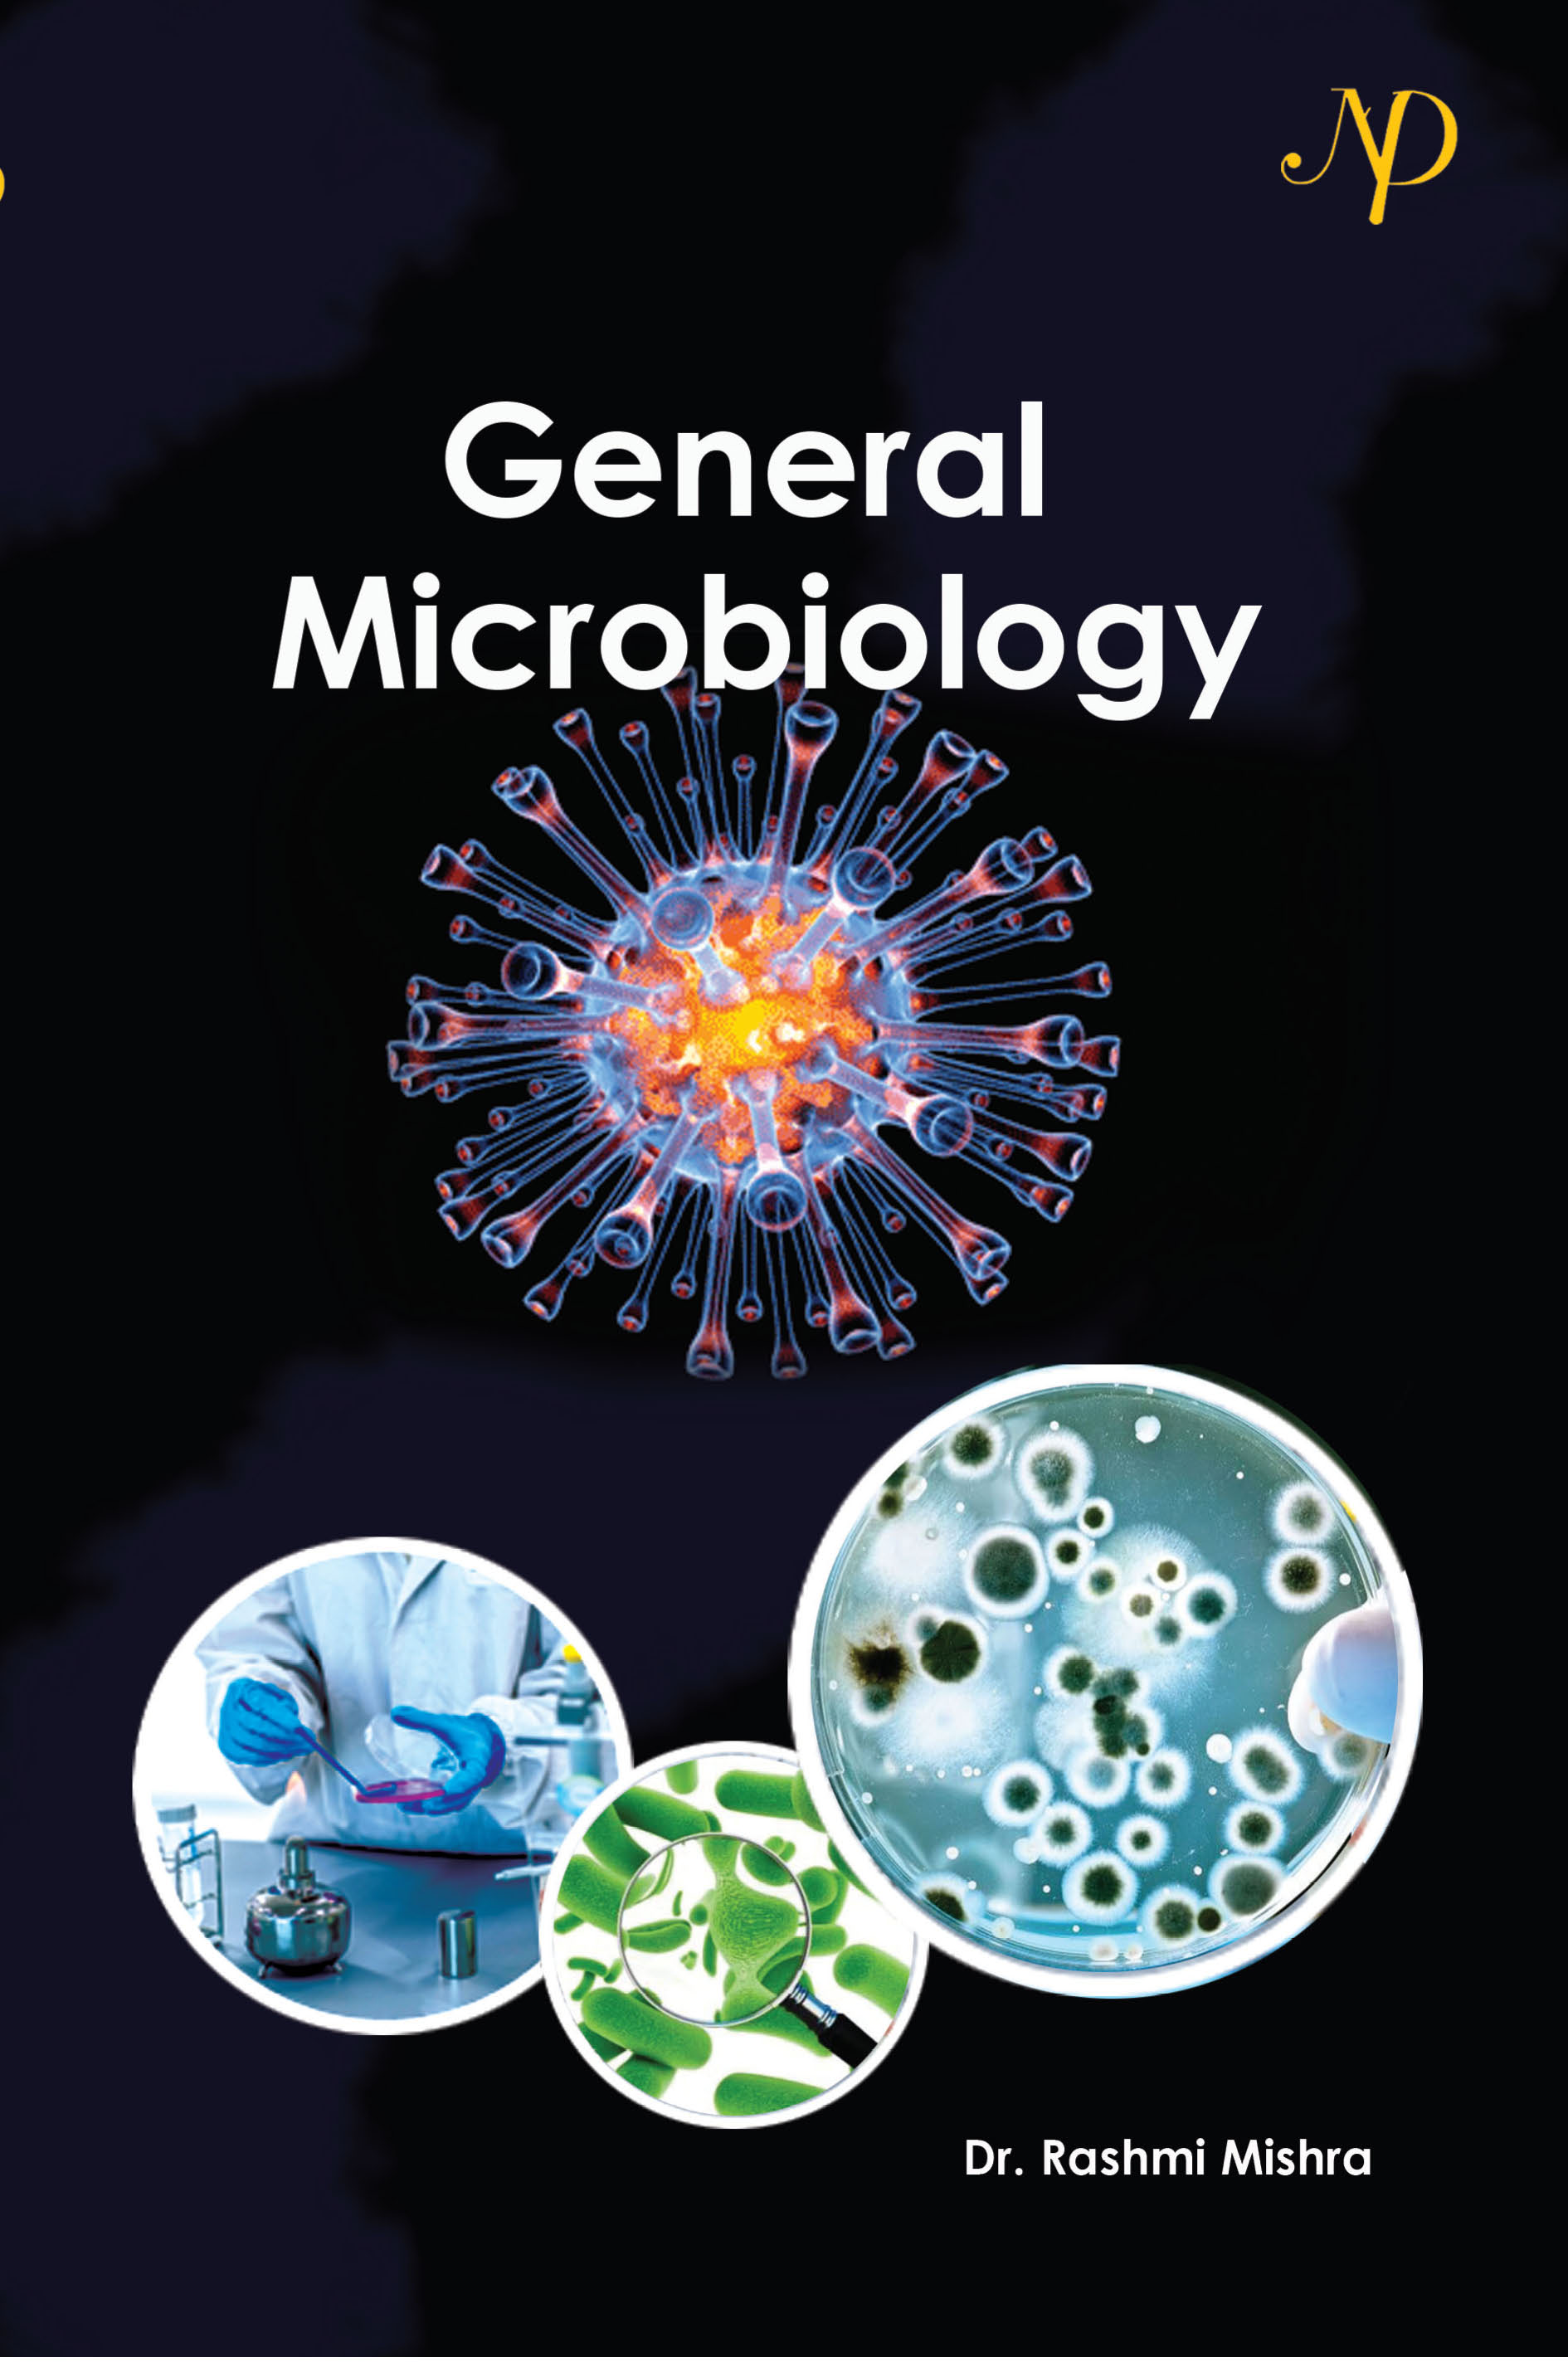 General Microbiological Cover.jpg